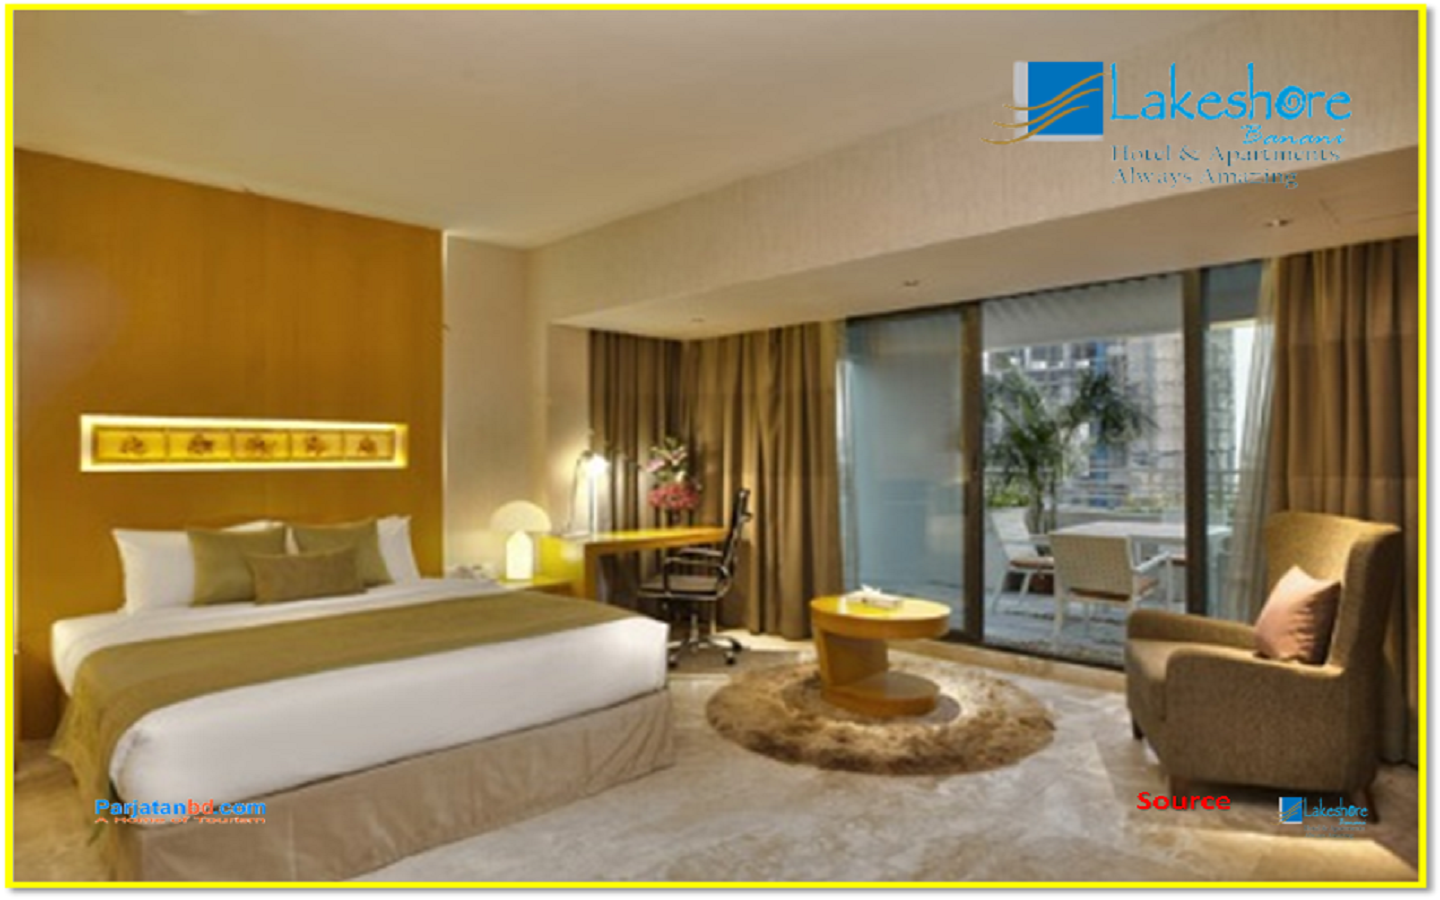 Room Lakeshore Penthouse Suite -1, Lakeshore Hotel, Banani